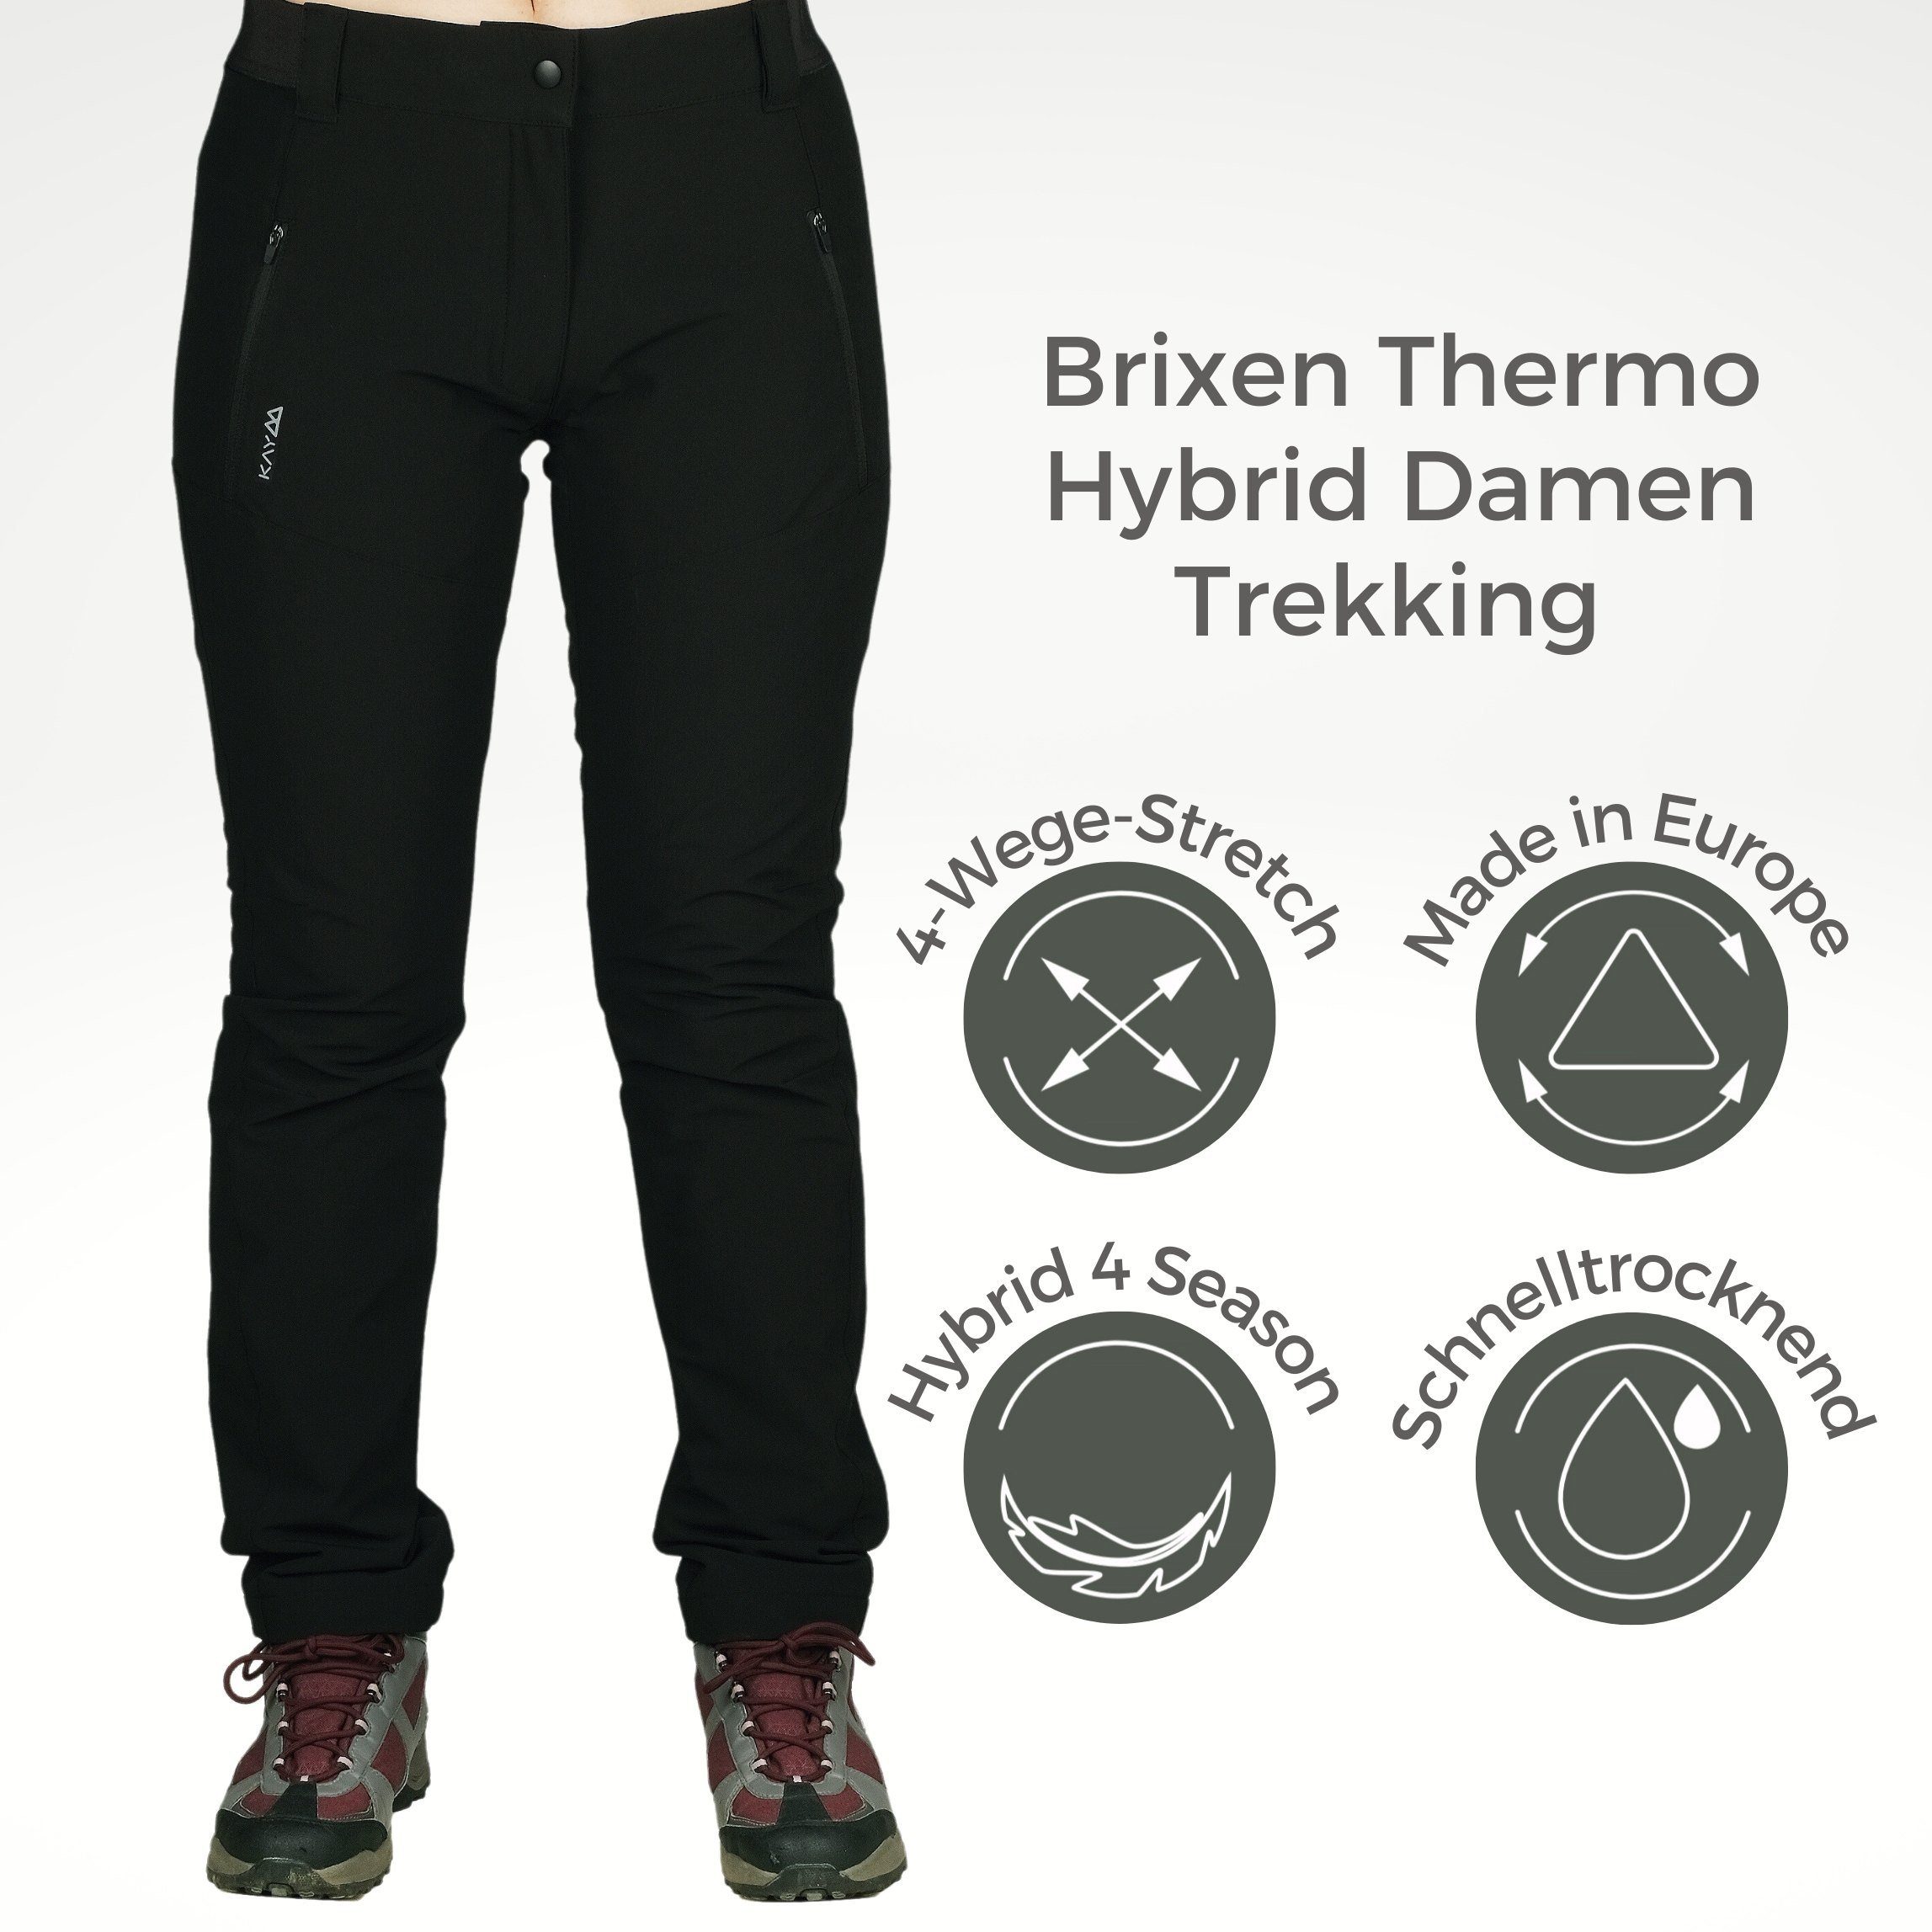 44 Wander Thermo Wasserdicht Trekkinghose Hybrid Kaymountain Damen Outdoor Black Brixen Hose